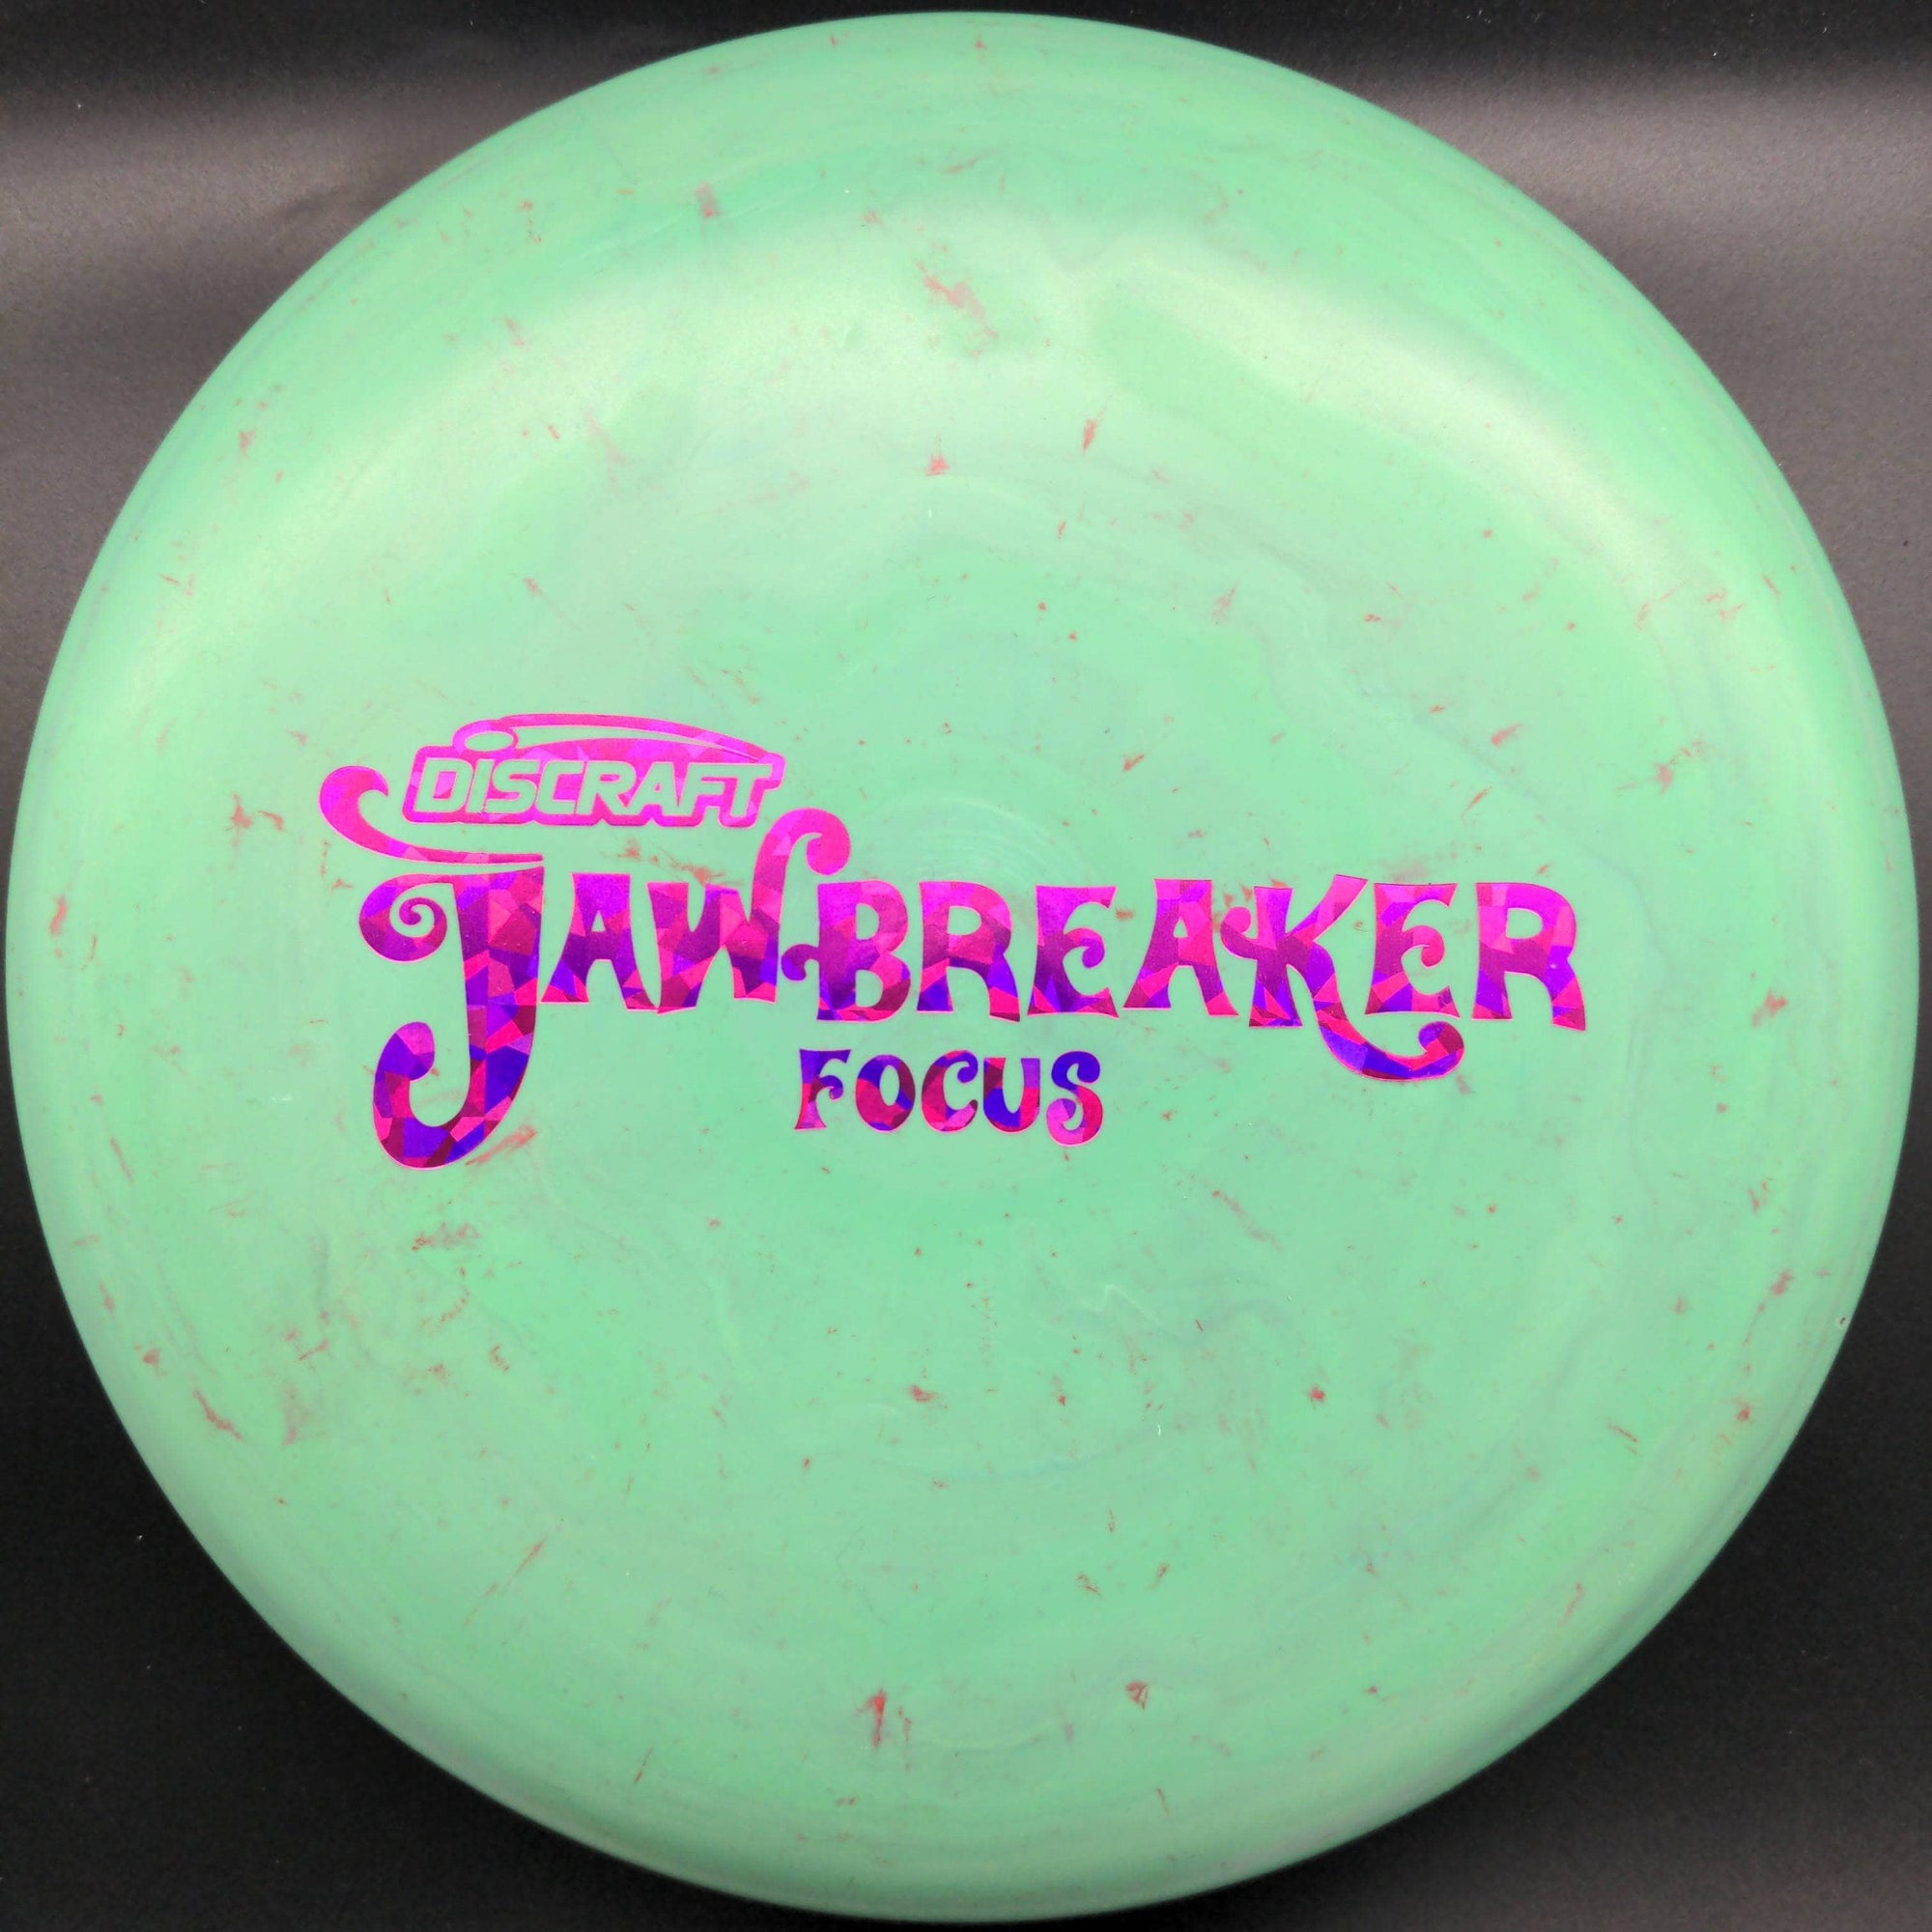 Discraft Putter Teal Pink Shatter Stamp 174g Pudde Top Focus, Jawbreaker